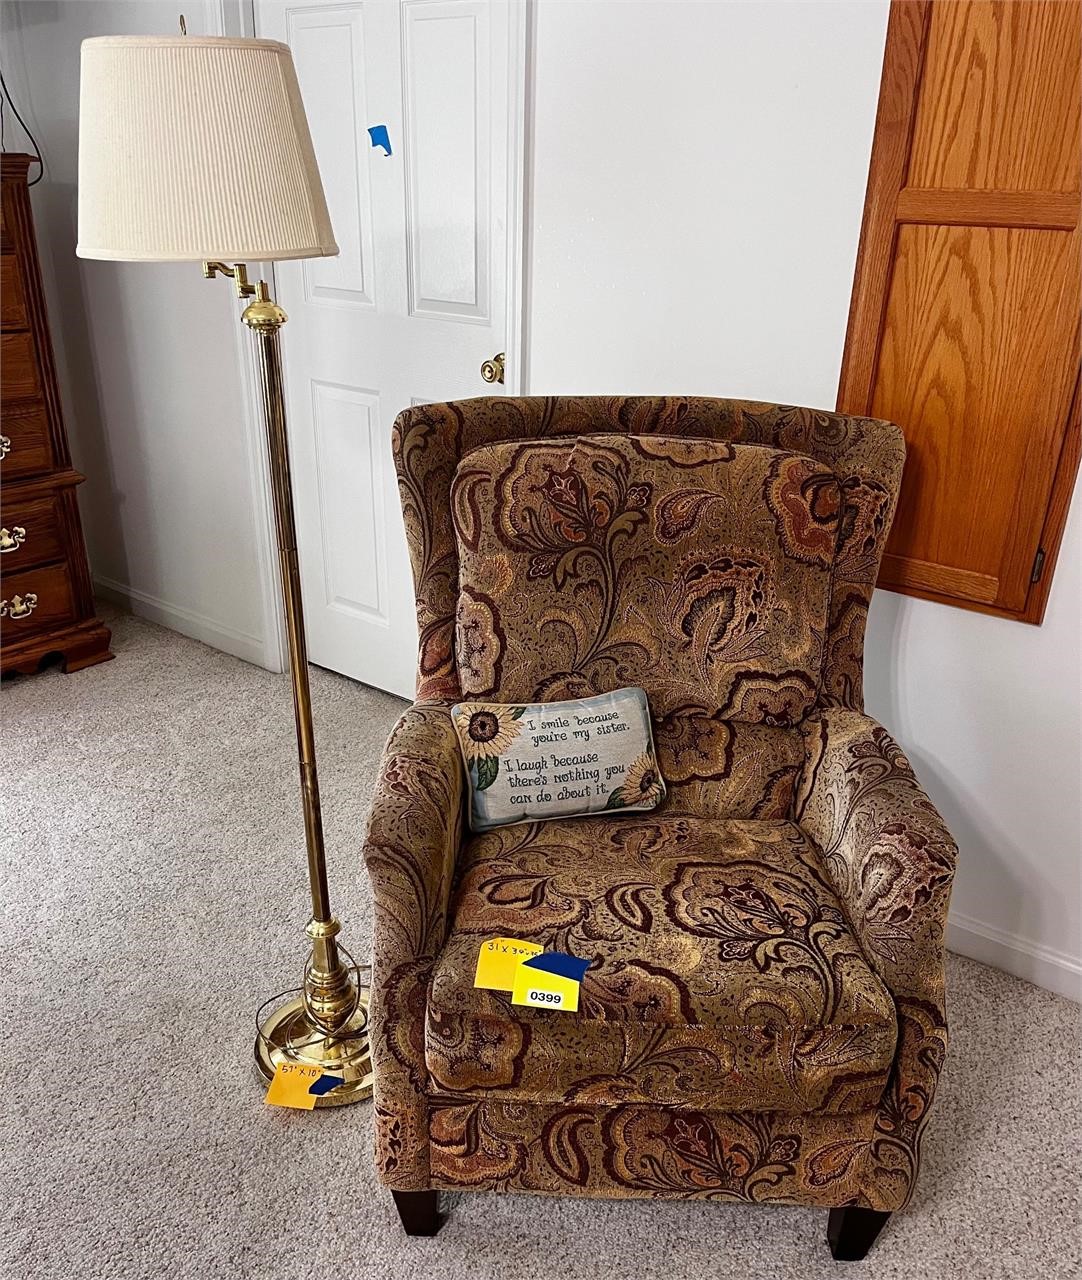 Cozy Reading Chair & Floor Lamp